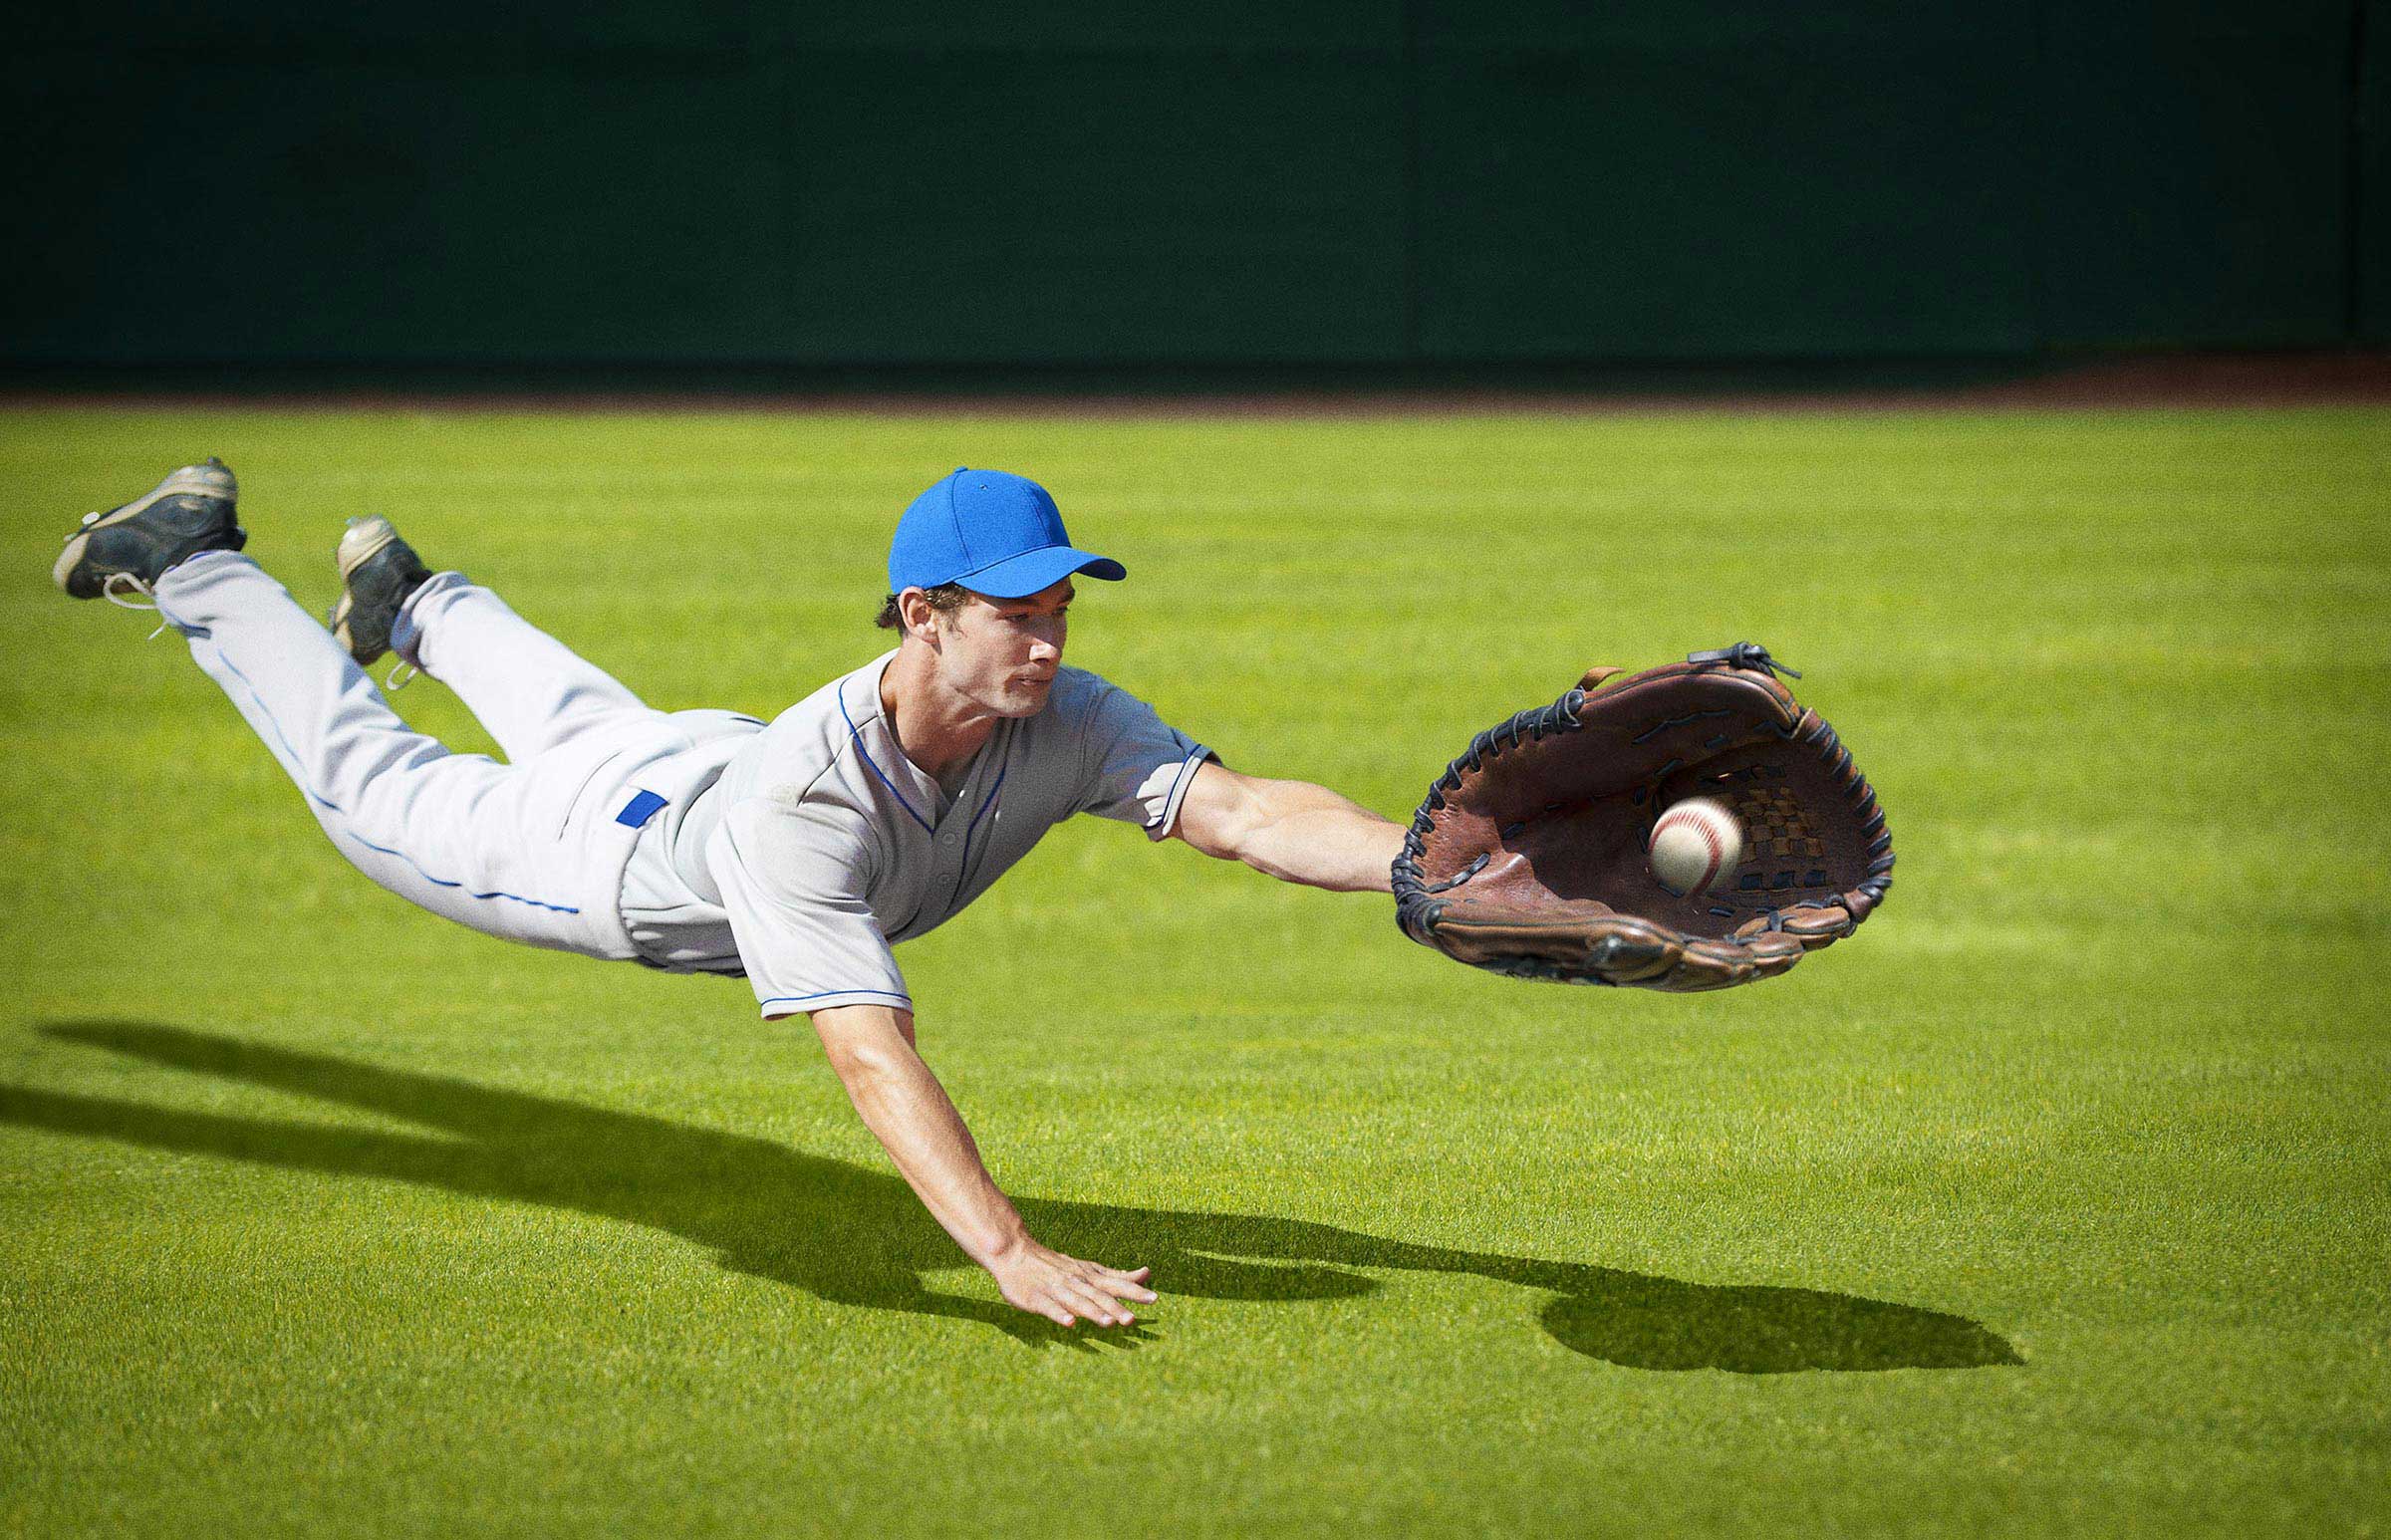 baseball-player-diving-catch.jpg